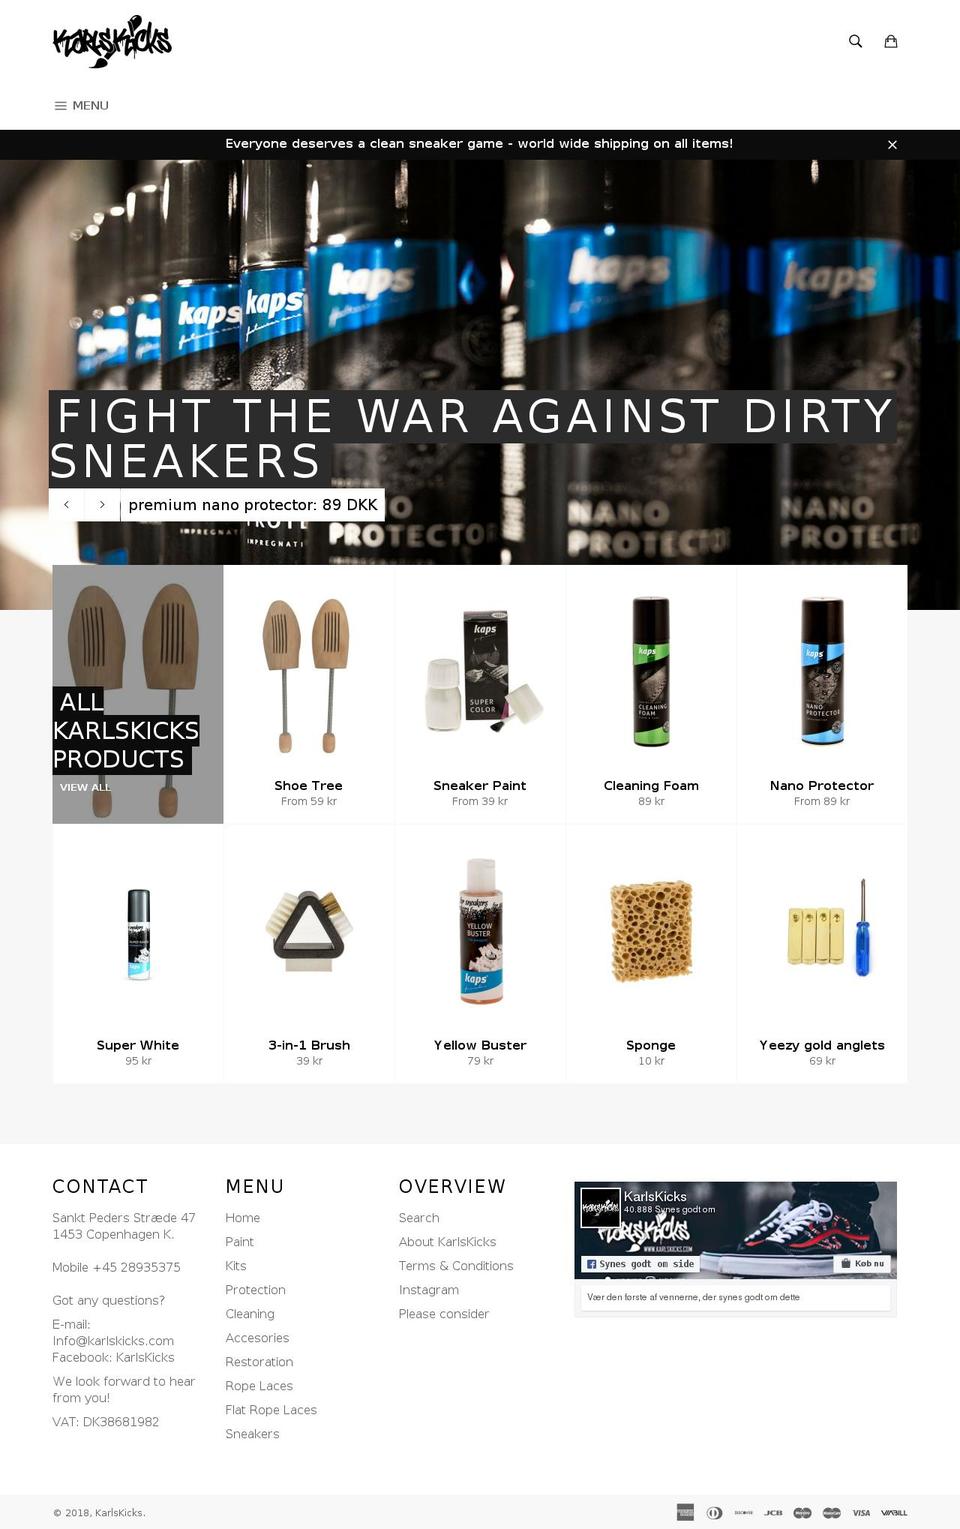 karlskicks.com shopify website screenshot